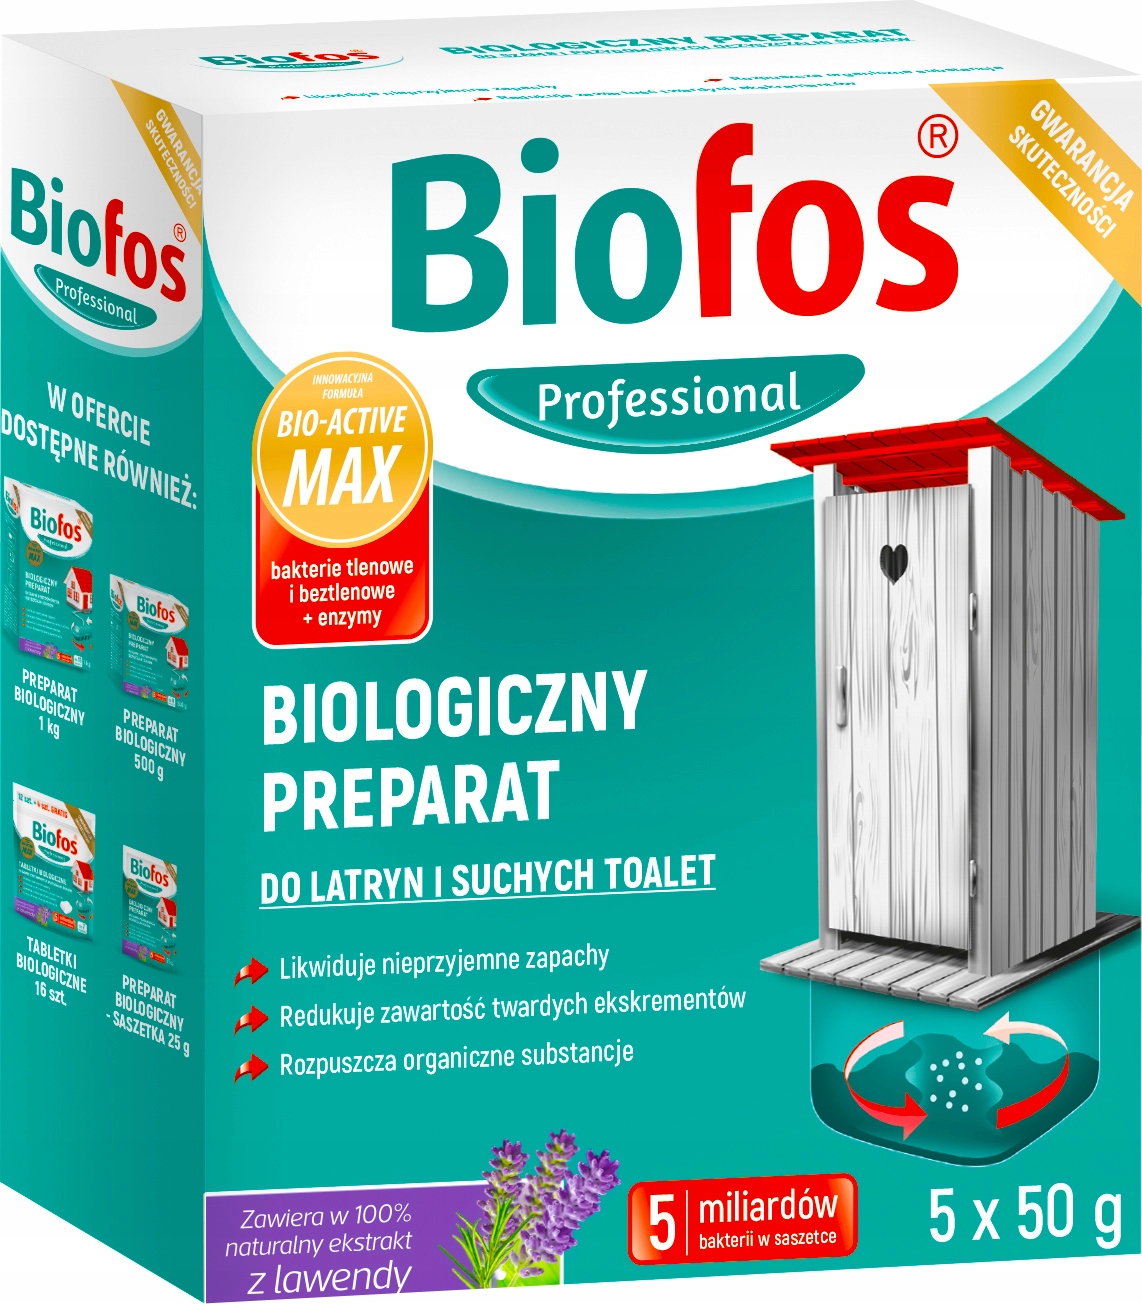 Biofos Biofos preparat do latryn i suchych toalet 5x50g